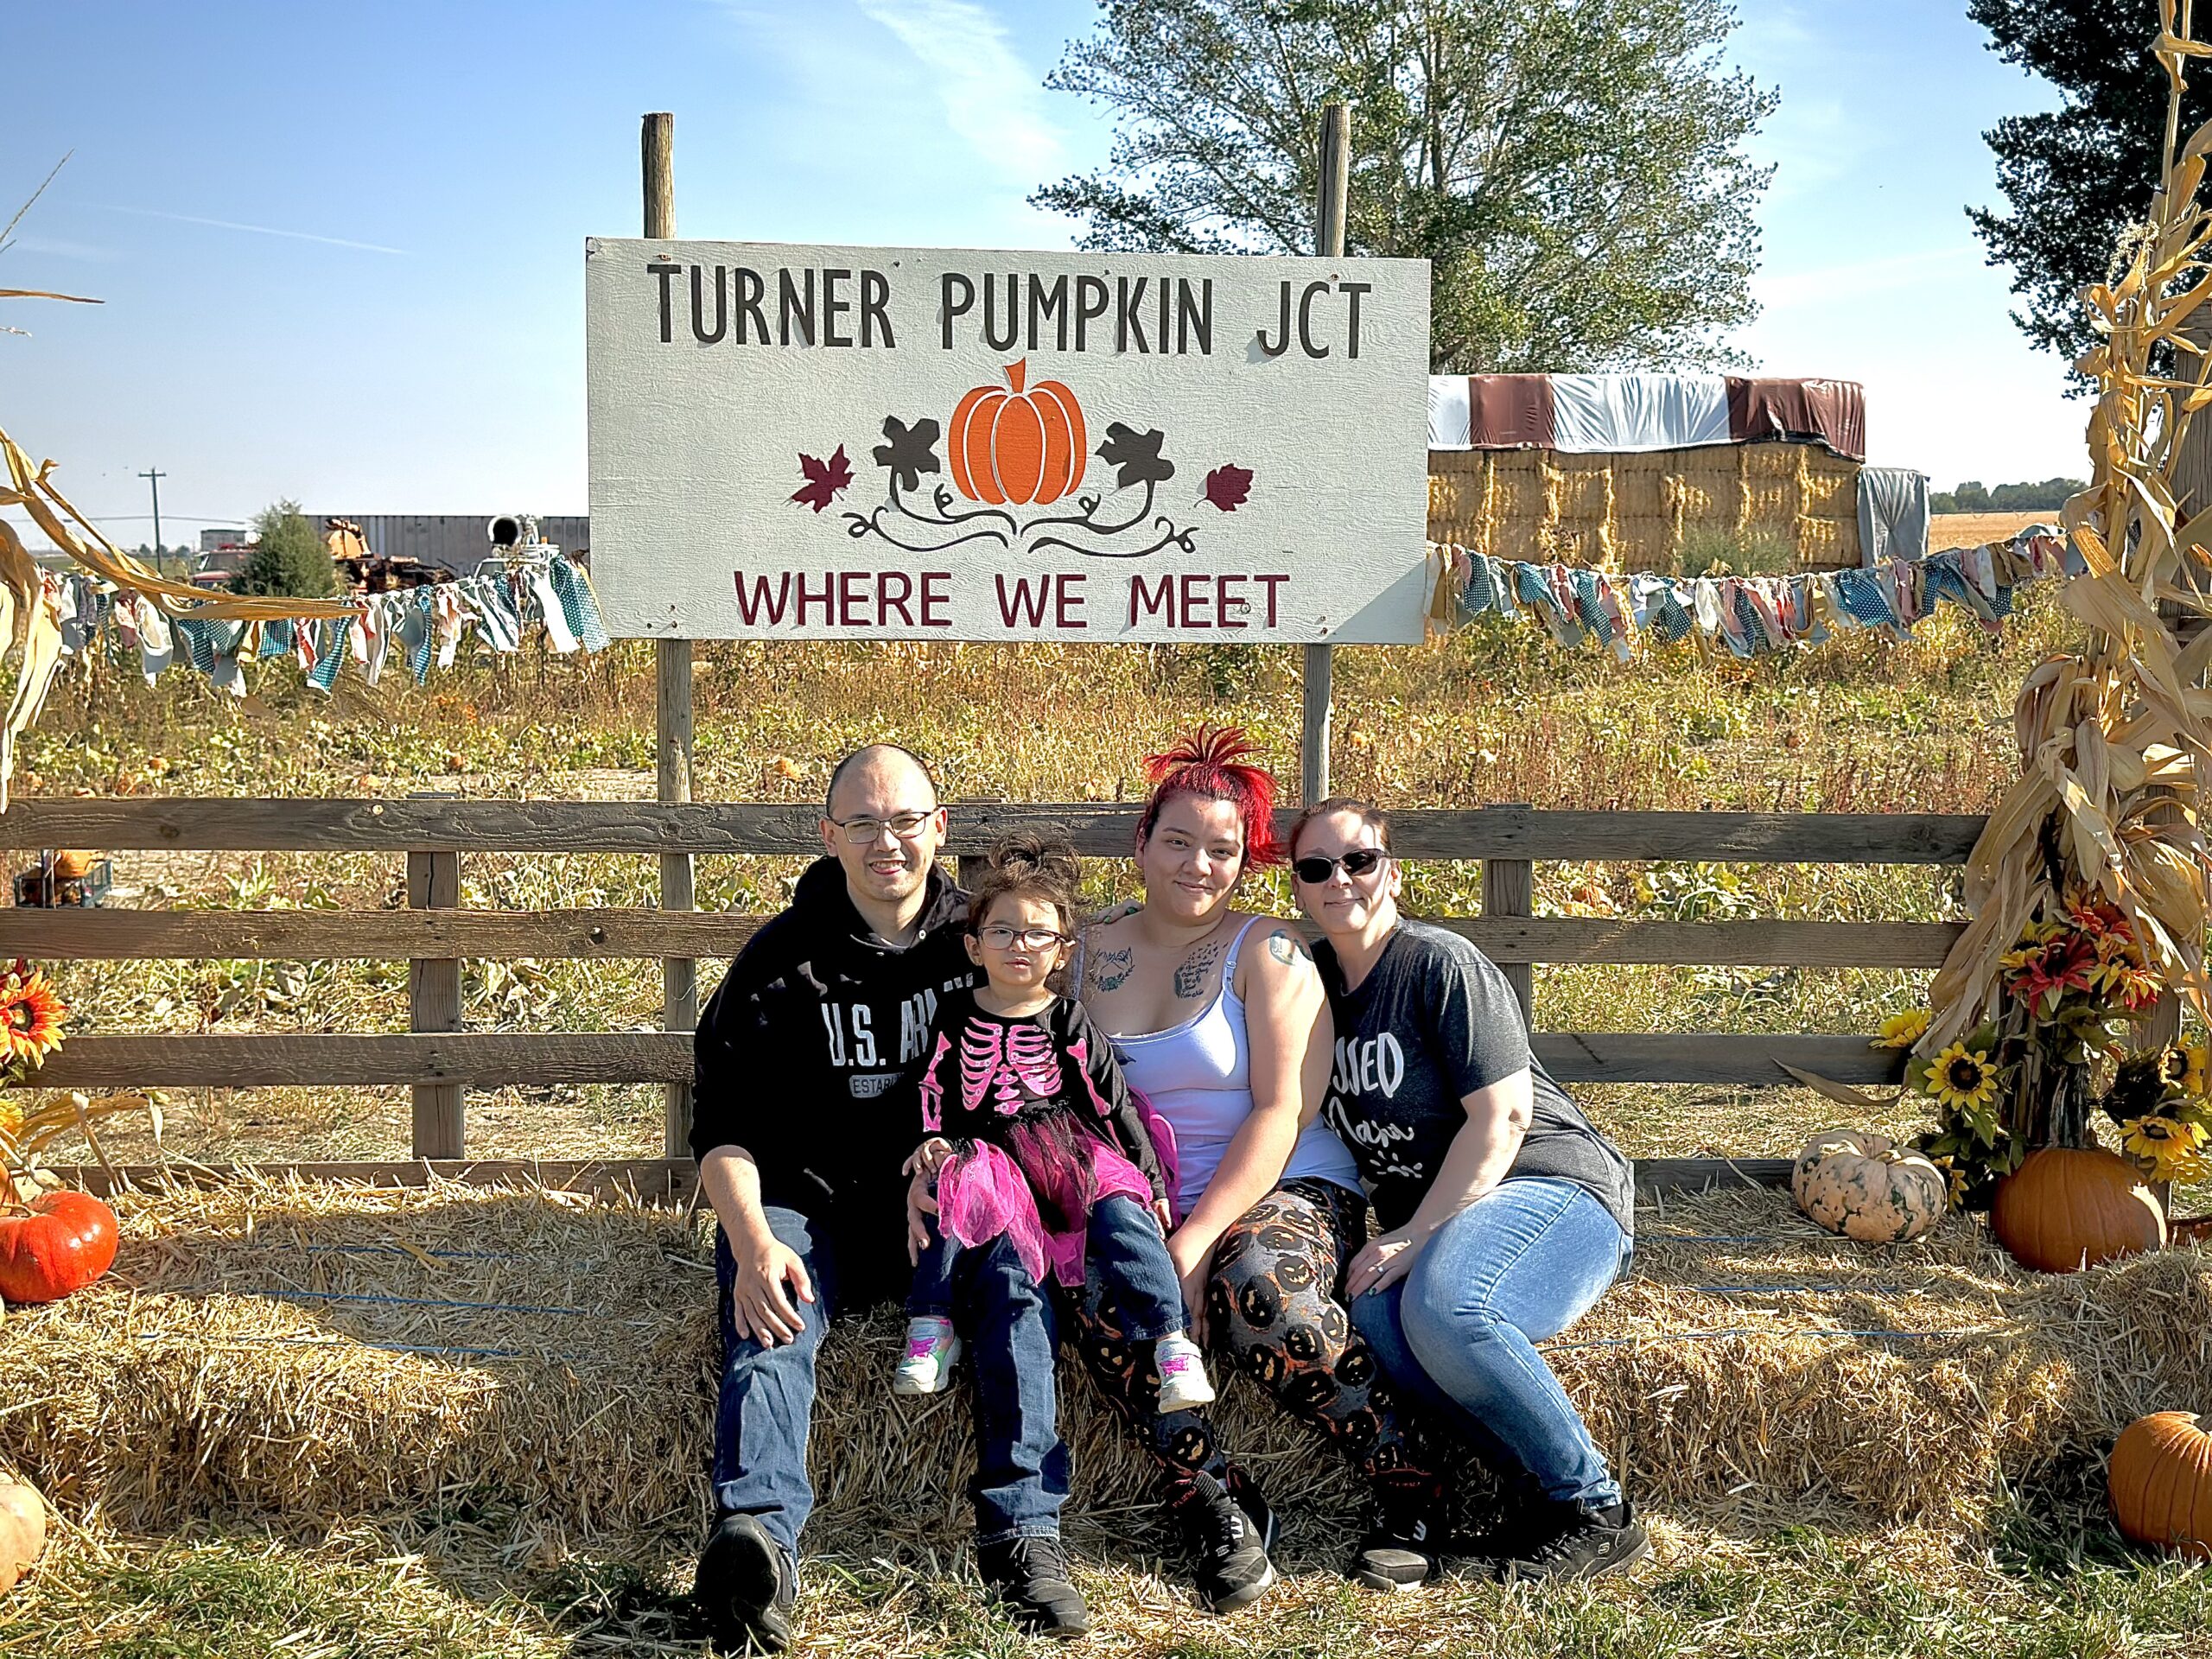 Turner pumpkin junction -039